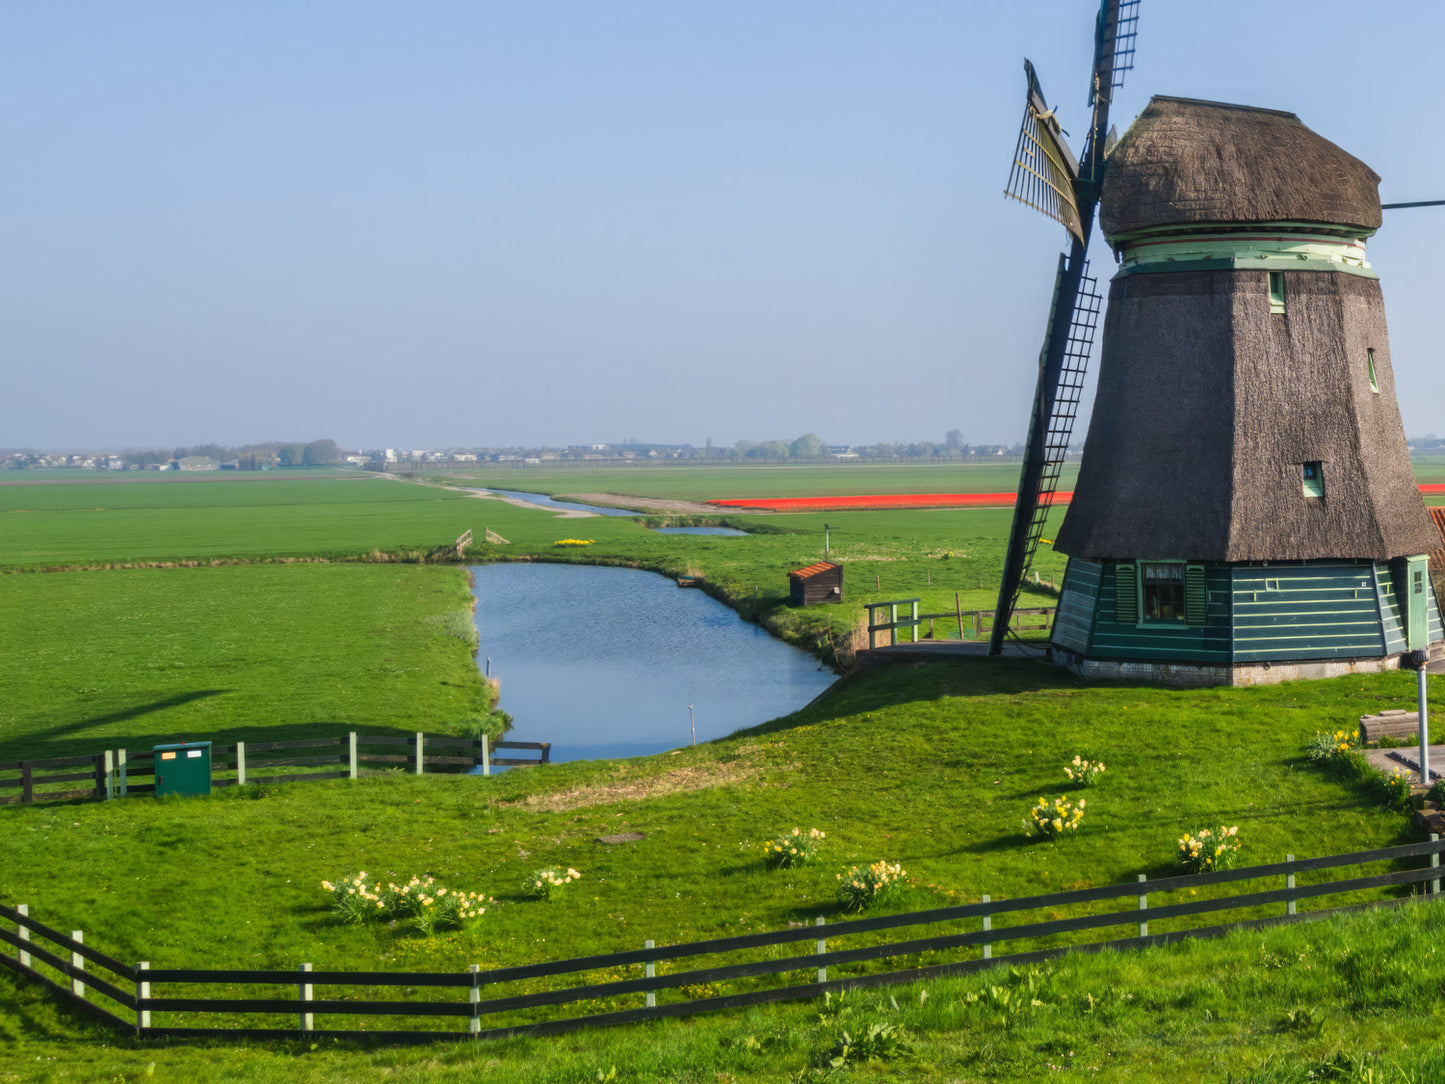 Netherlands Windmill